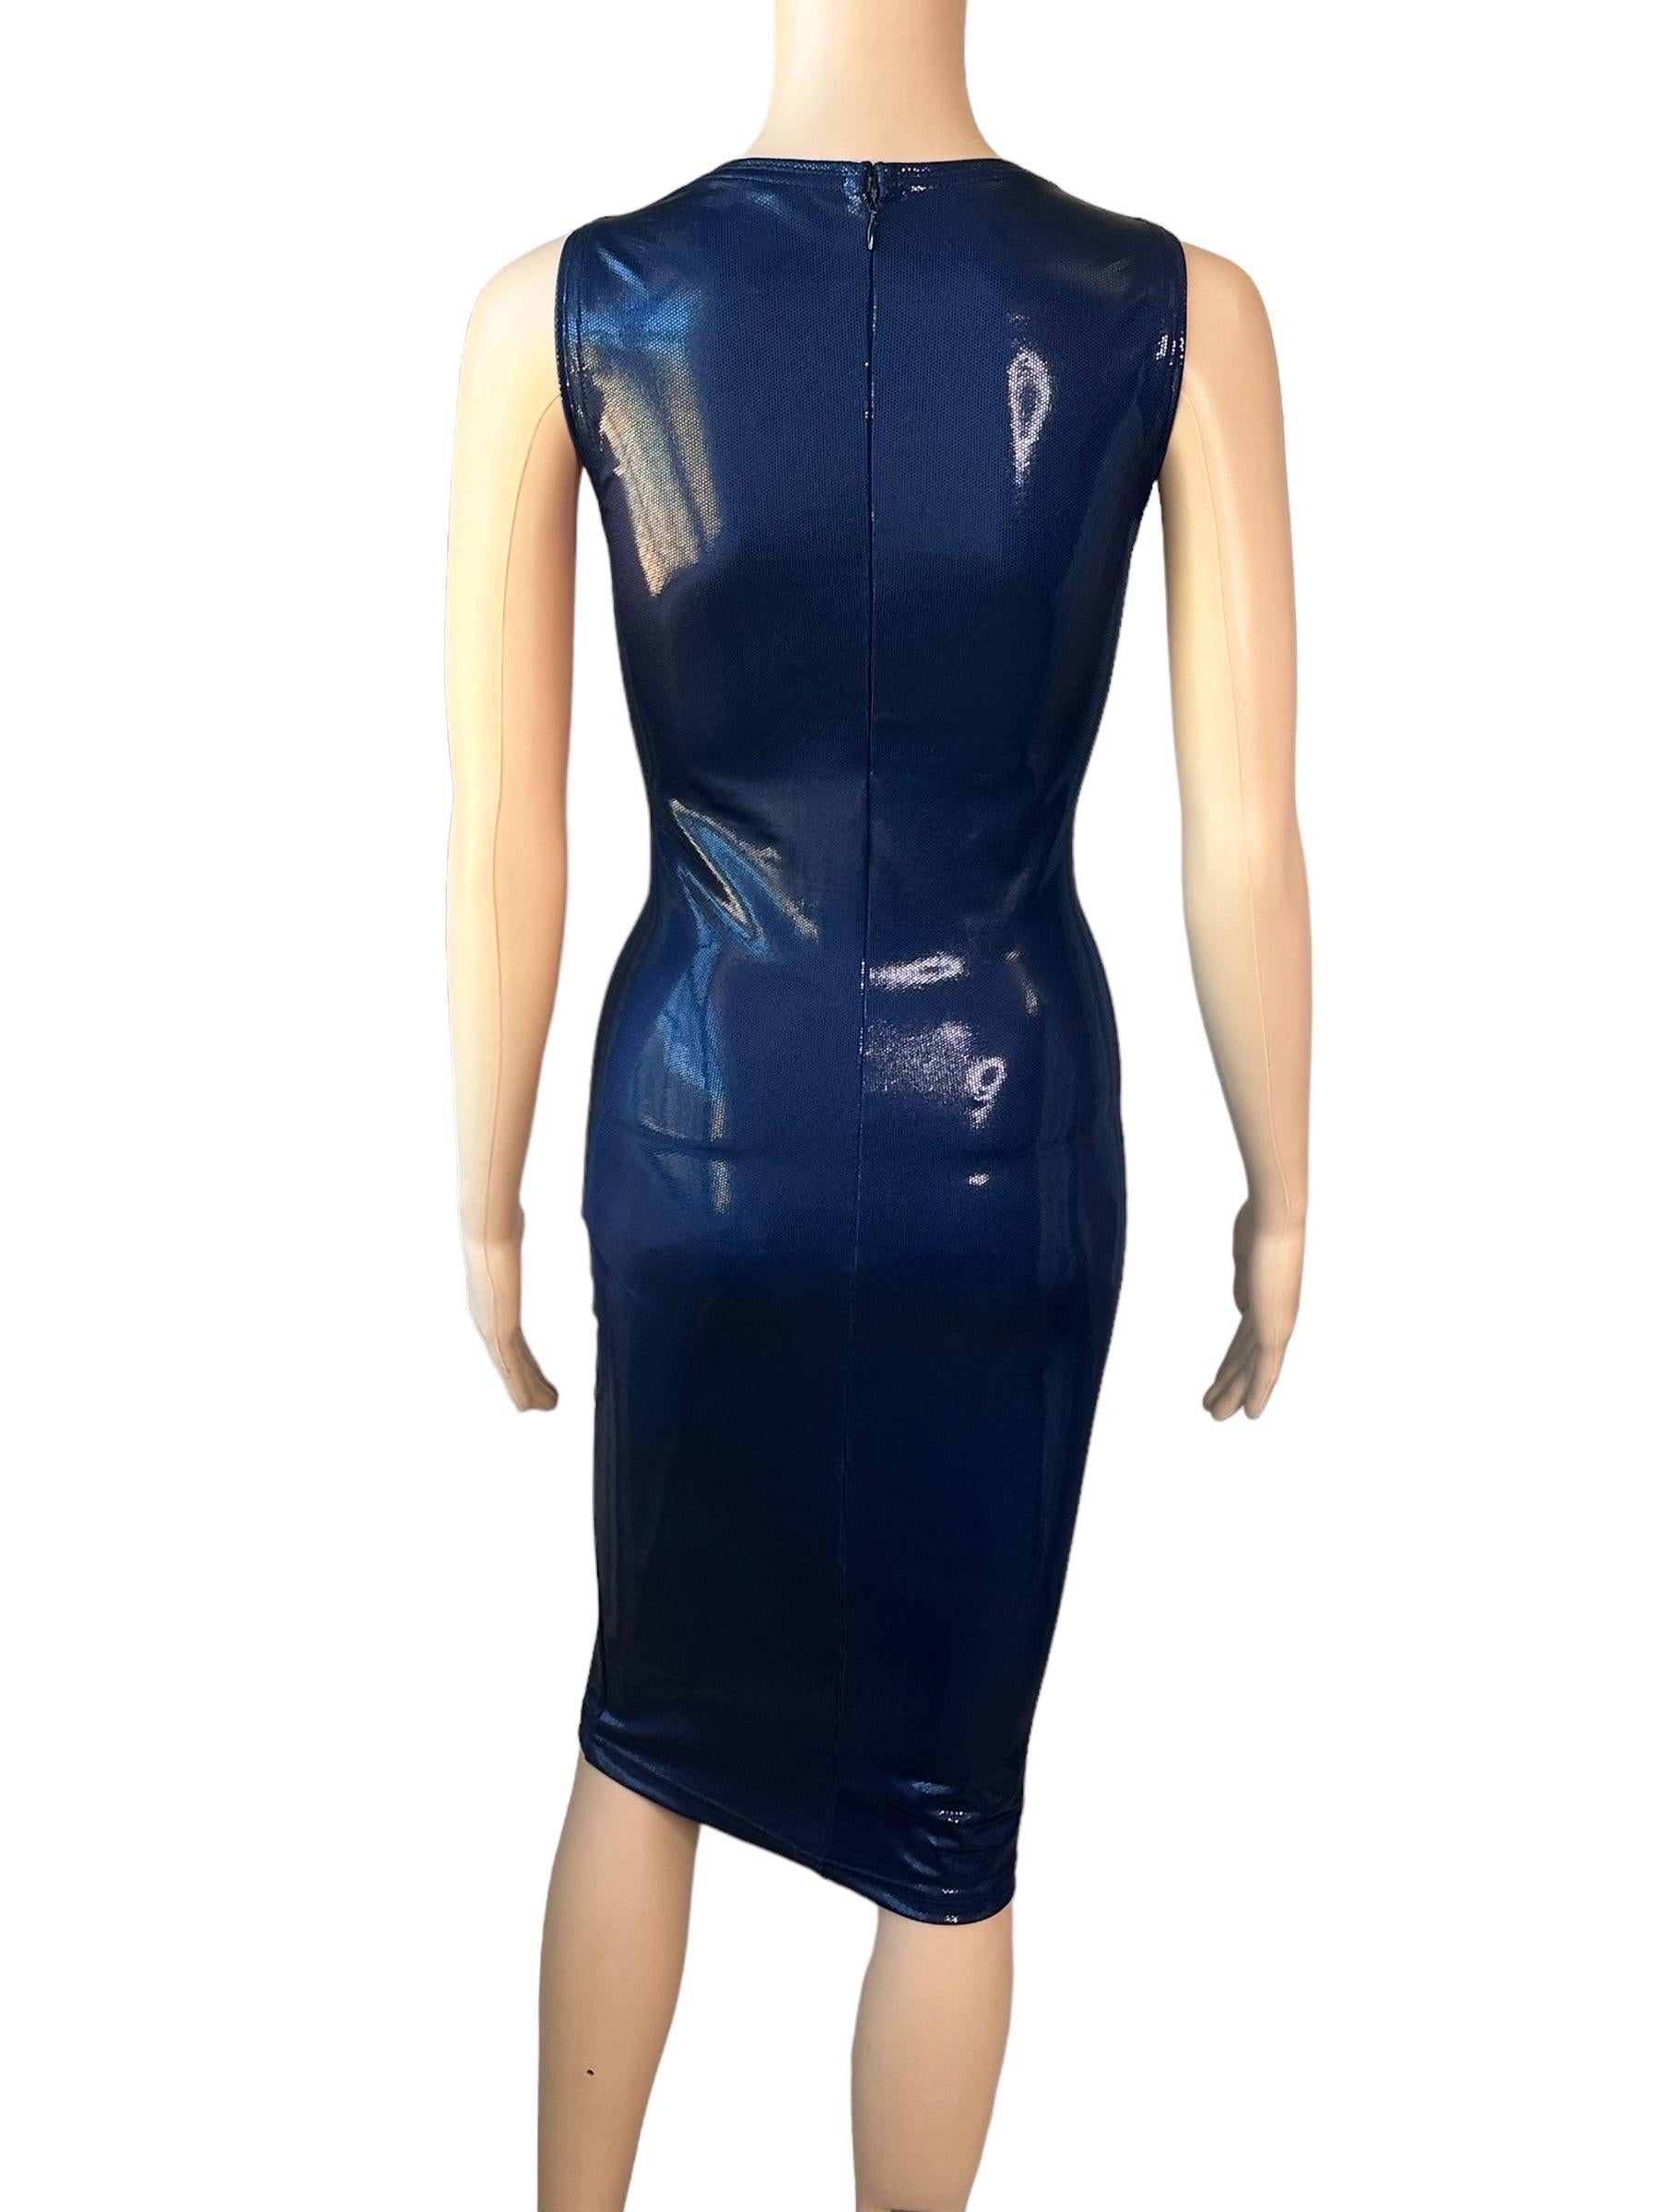 Gianni Versace c. 1994 Vintage Wet Looks Stretch Bodycon Navy Blue Midi Dress 5